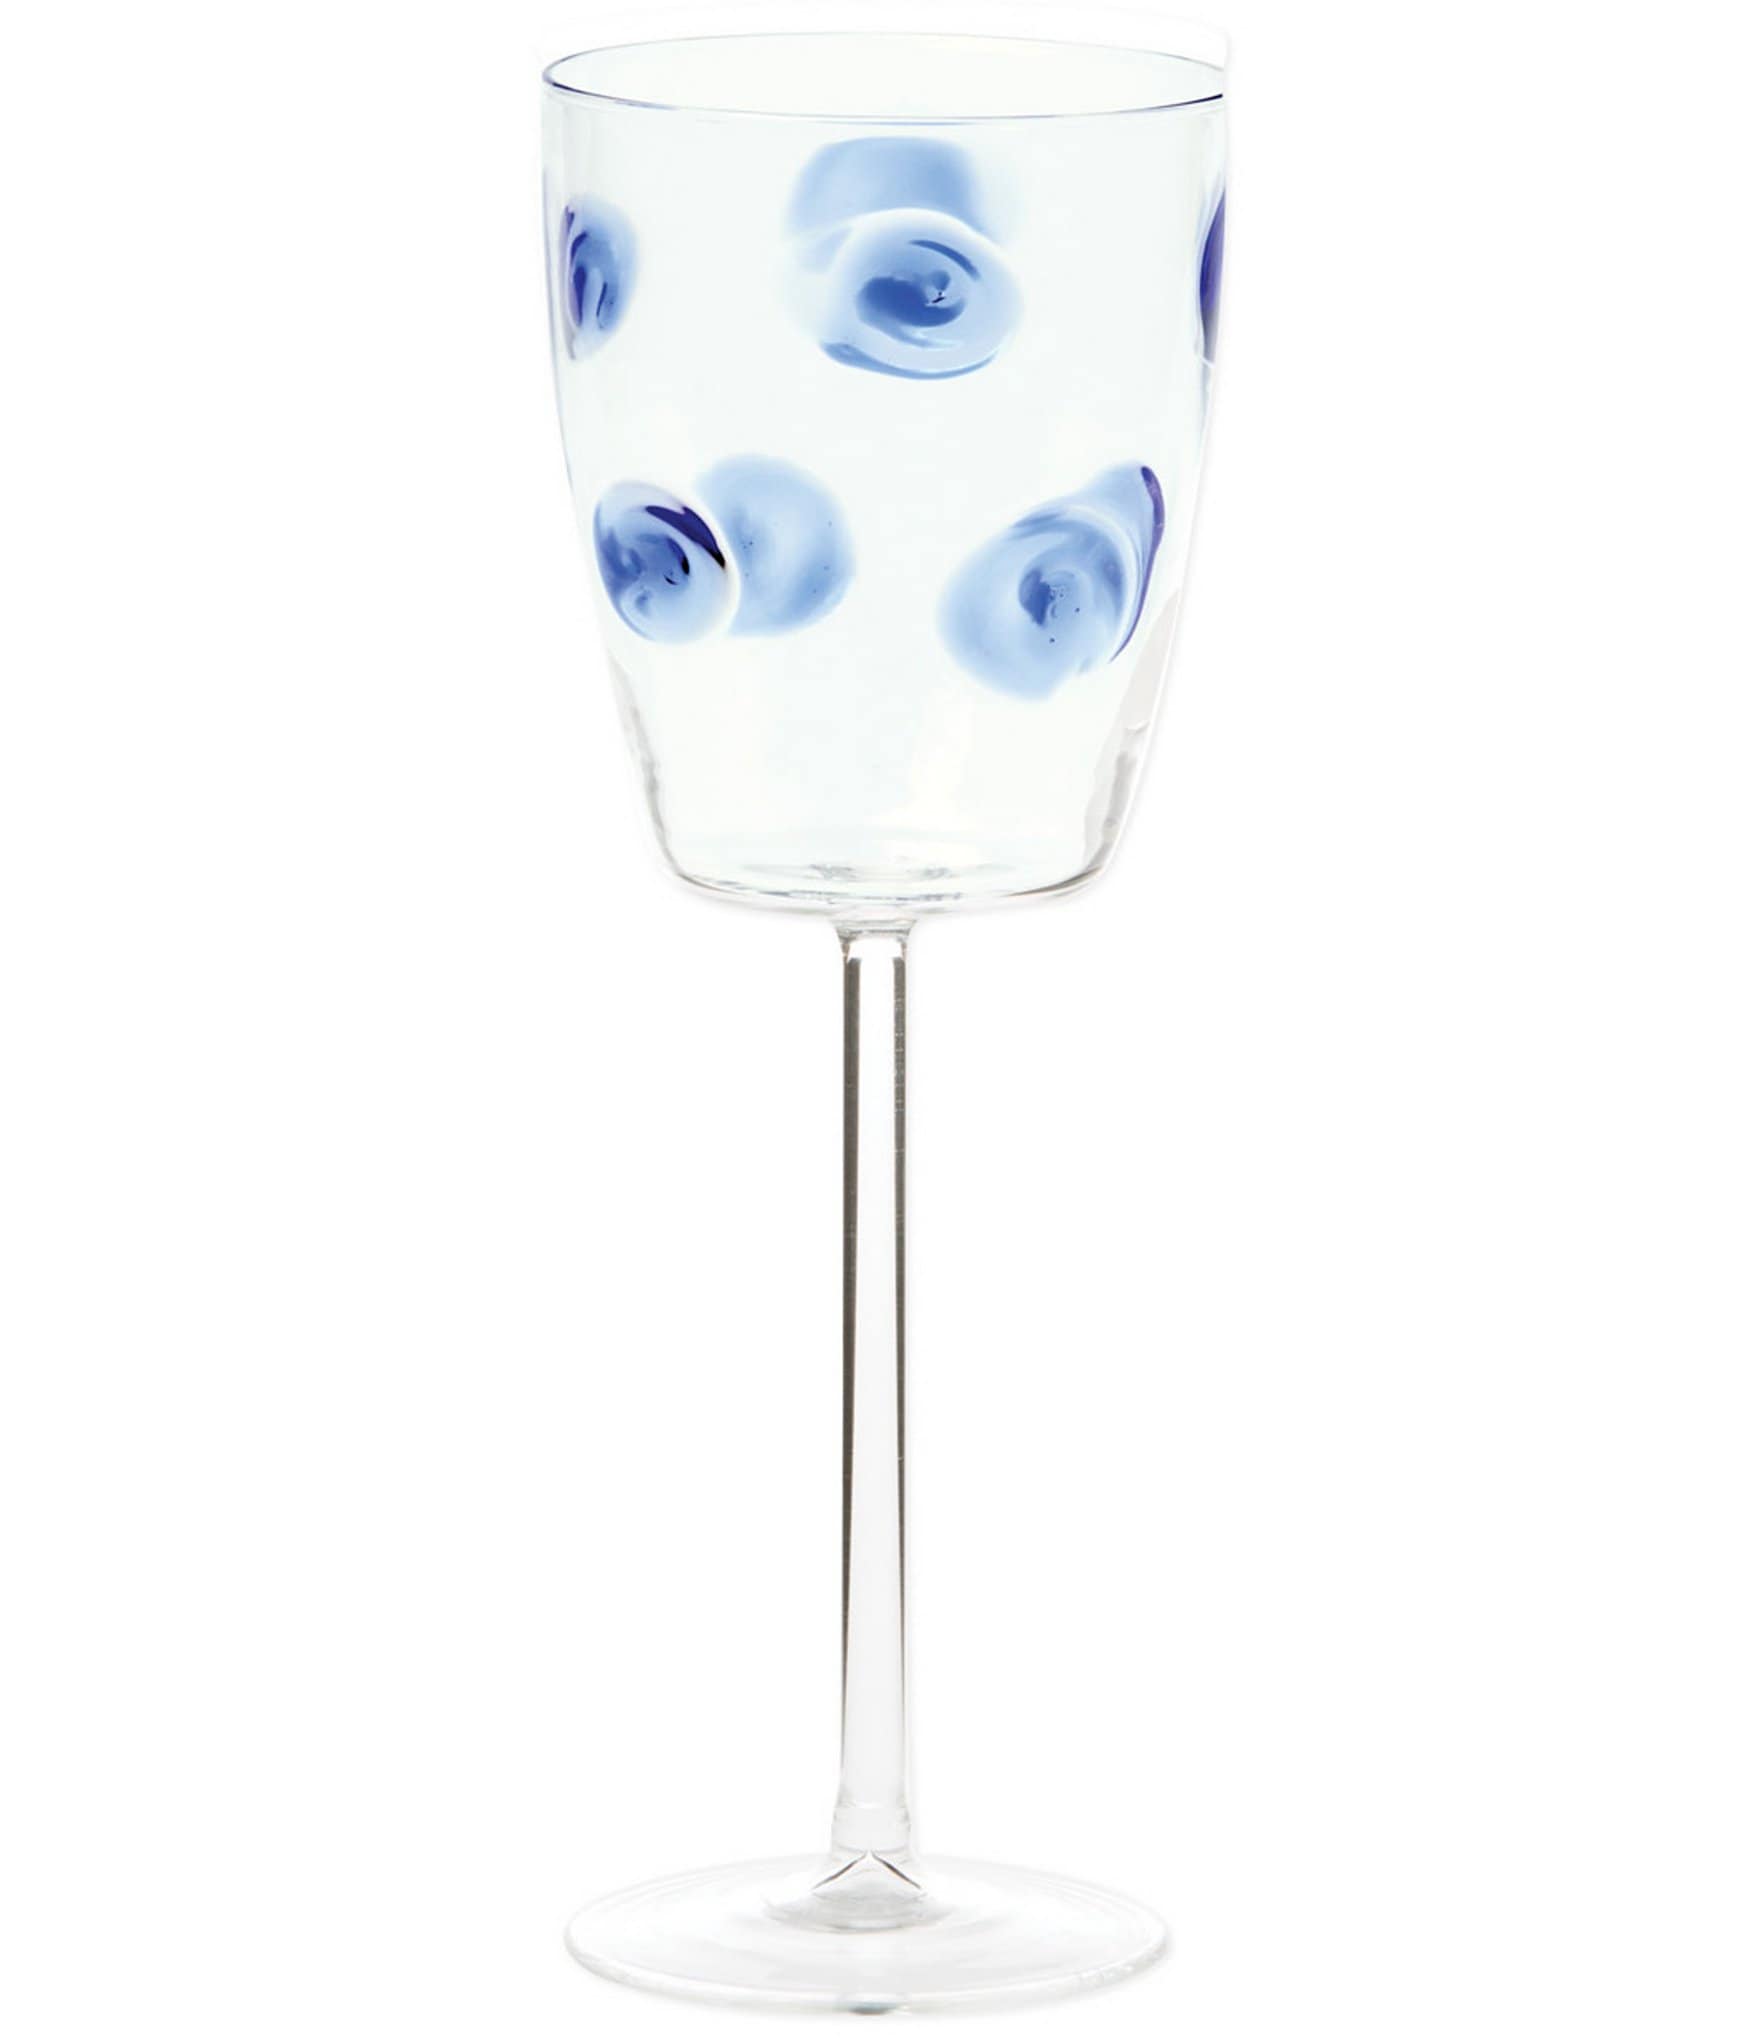 POSITANO WINE GLASSES - SET OF 2 - RED & BLUE - HAND PAINTED VENETIAN  GLASSWARE